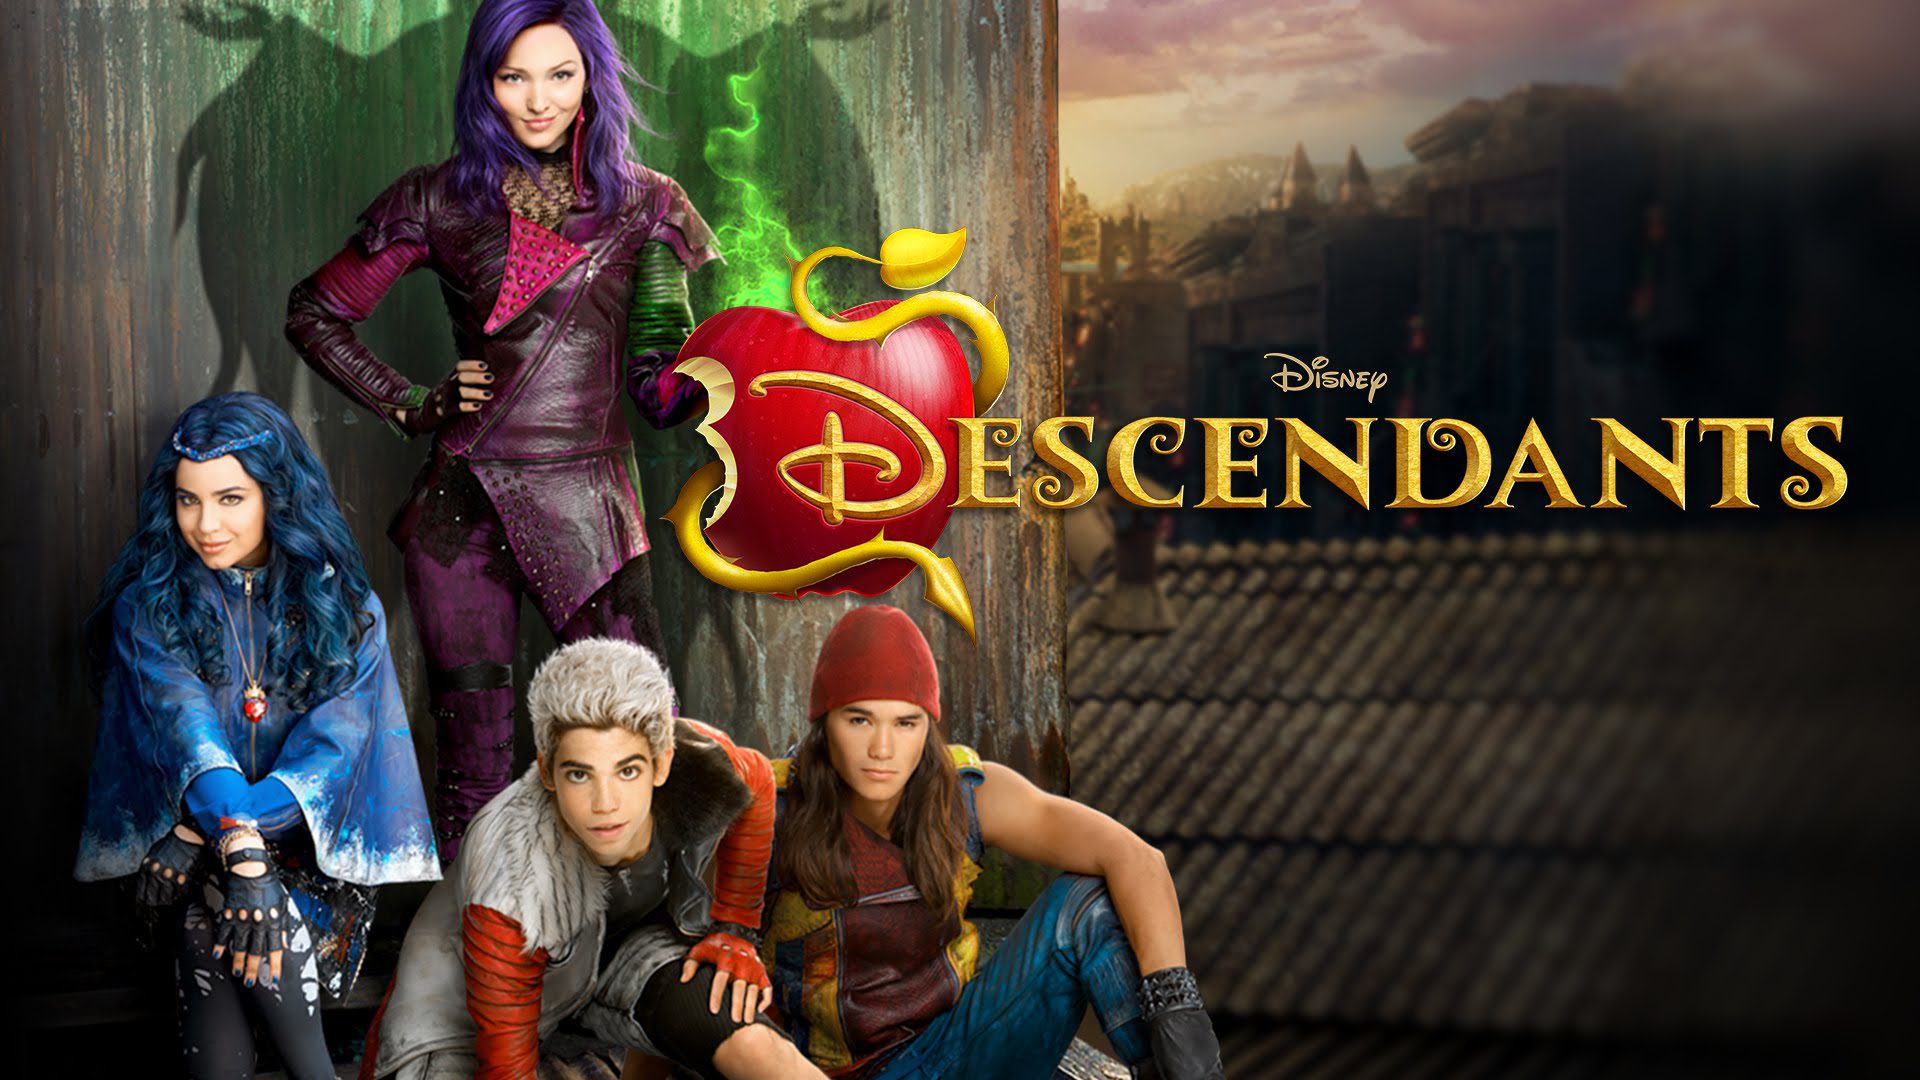 Director Kenny Ortega Talks about Disney’s Descendants